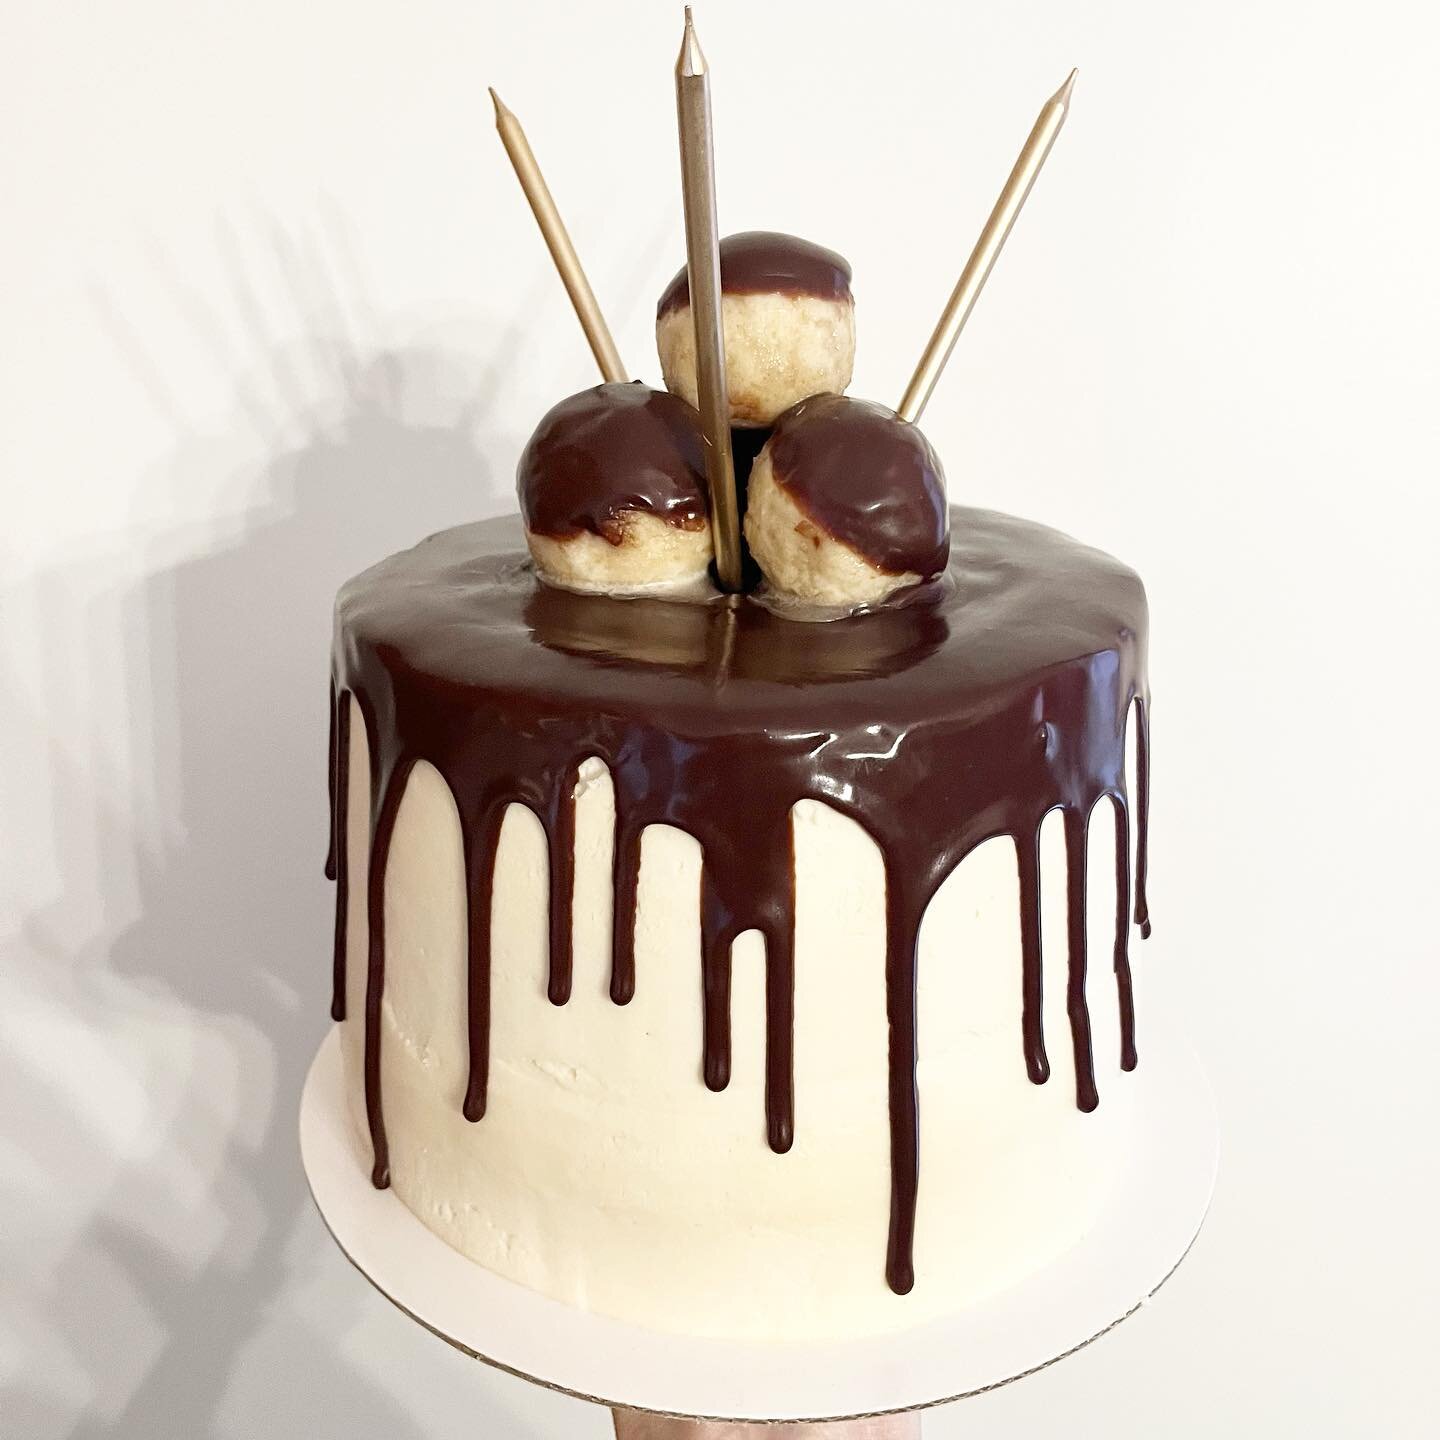 Boston cream pie birthday cake! 🤎🤍I did it! Topped with a potential new treat 🤫

#birthday #birthdaycake #cake #cakedecorating #bostoncreampie #bostoncreamdonut #bostoncreamcake #bostoncream #munchkins #donutholes #donut #cakepops #cakepop #creati